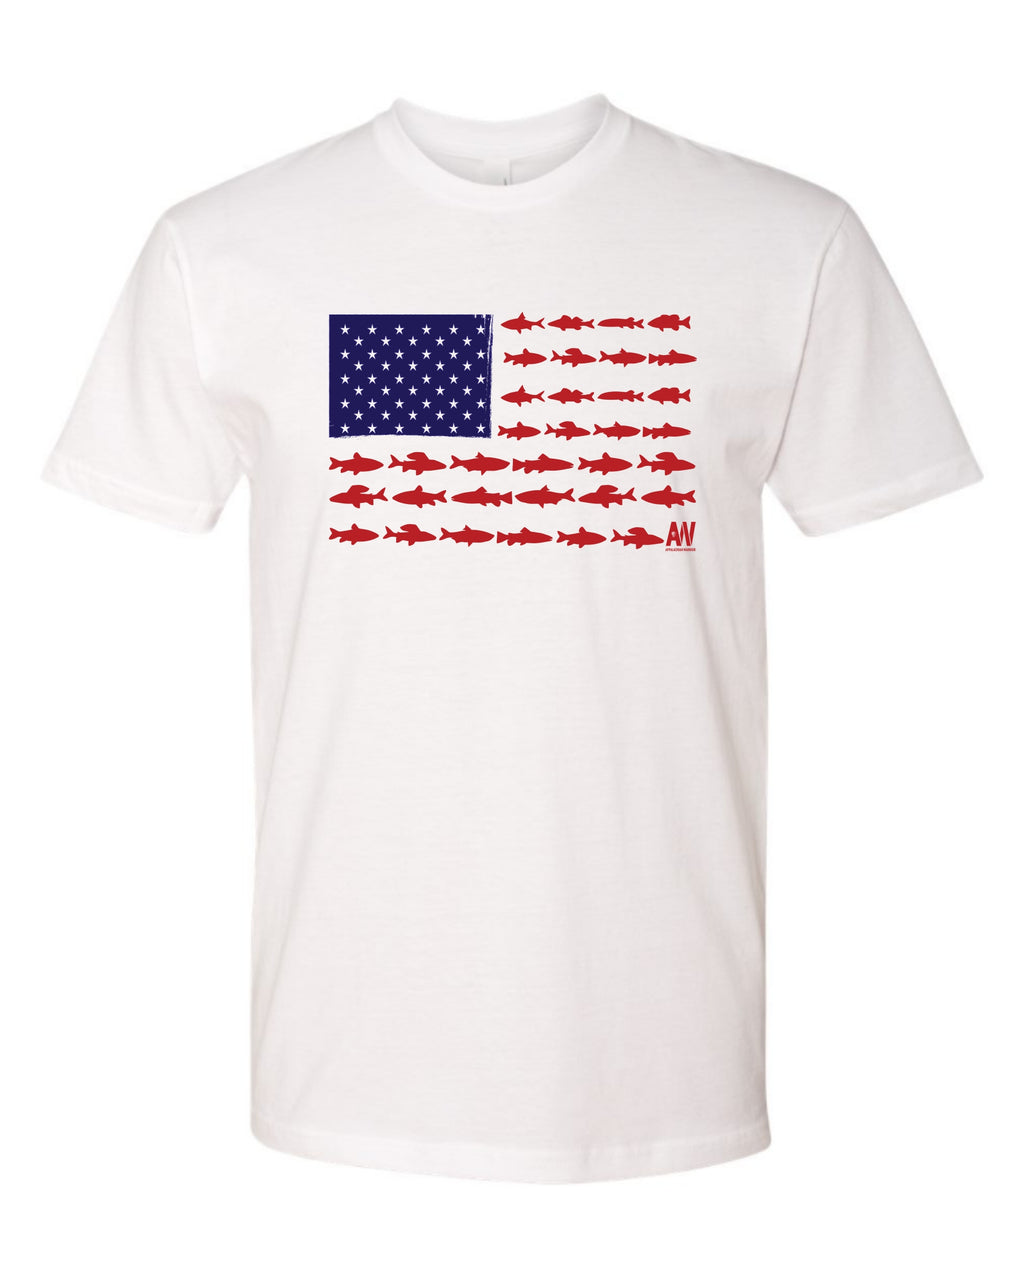 Fish Flag - Shirts for Men